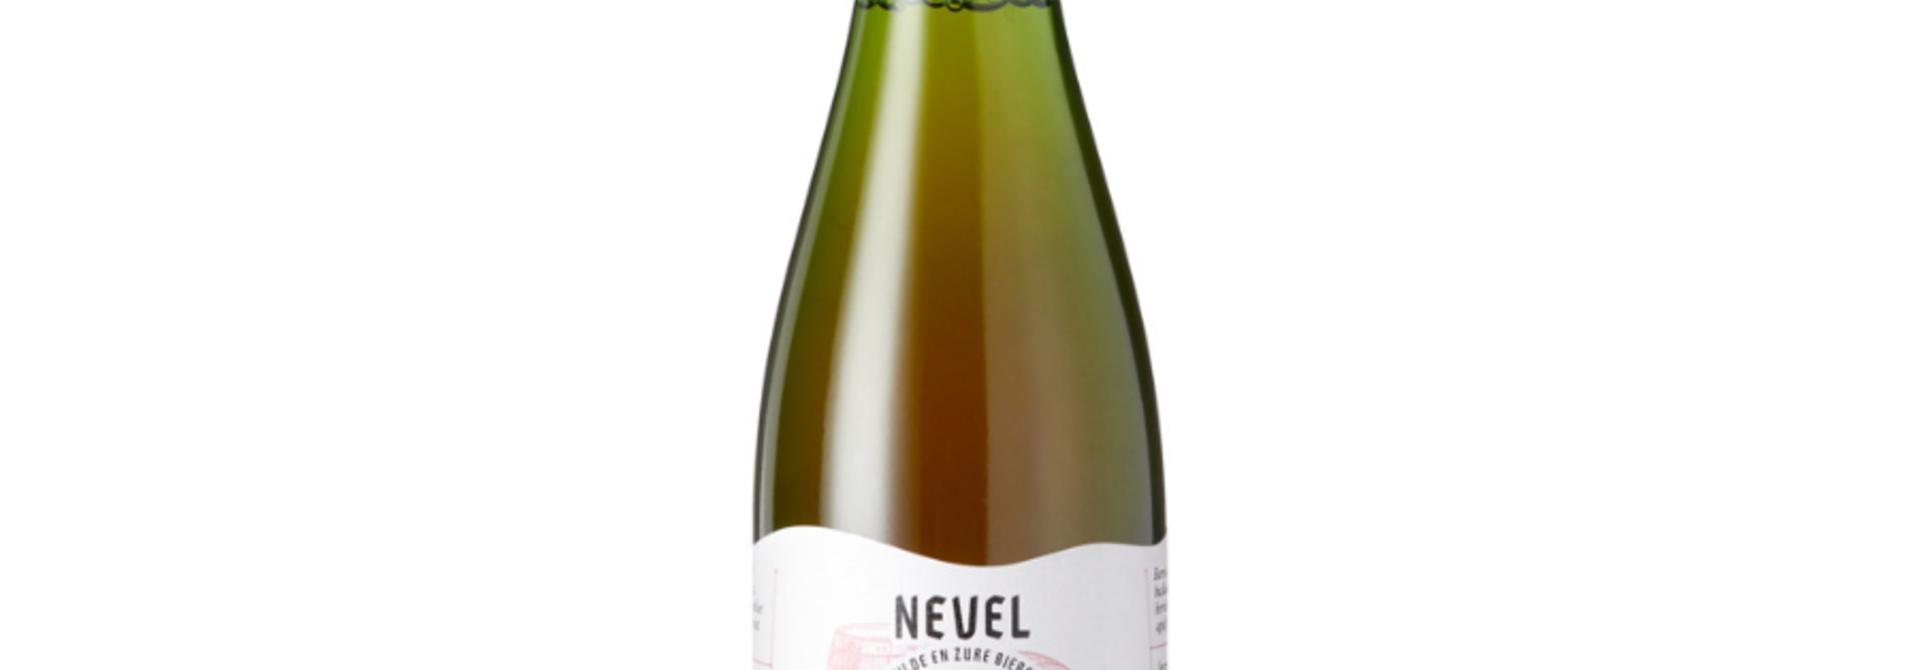 Nevel Wild Ales Purper 37,5cl 4,5%